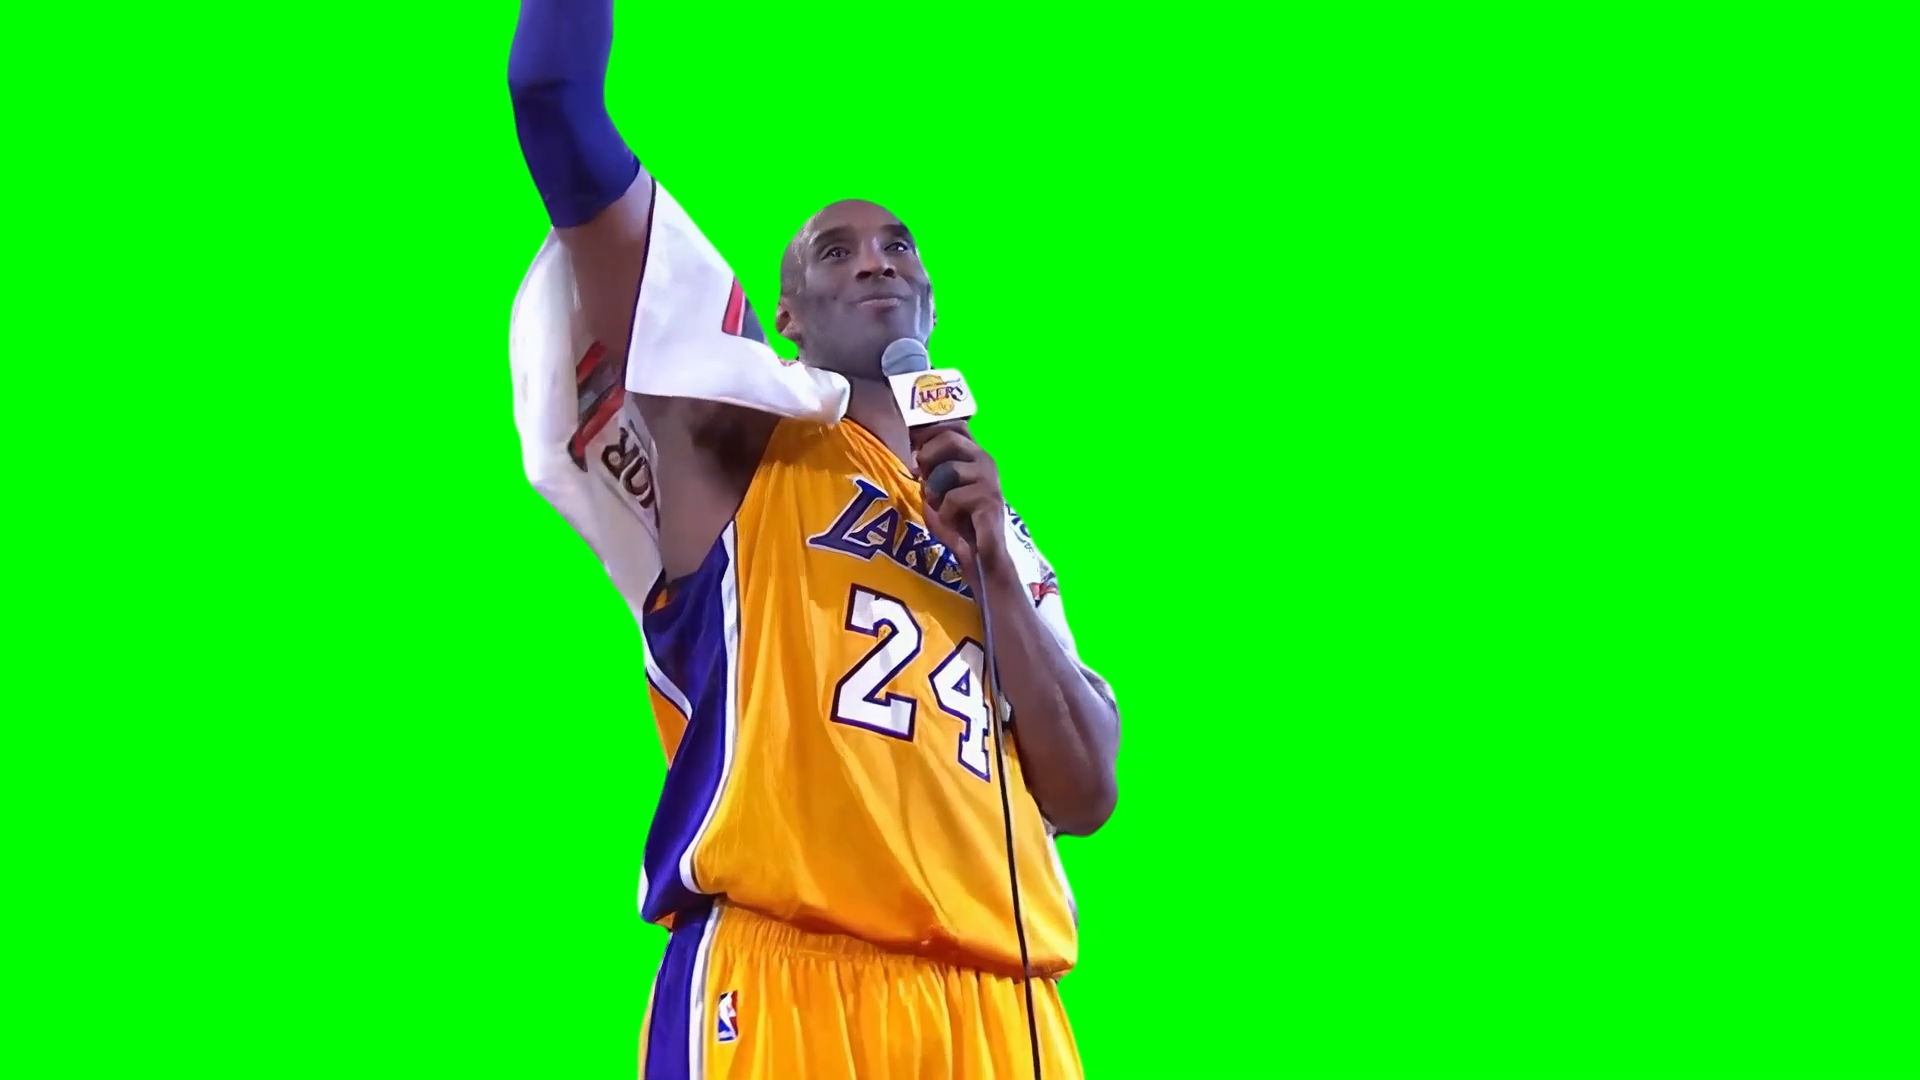 MAMBA OUT! - Kobe Bryant NBA meme (Green Screen)